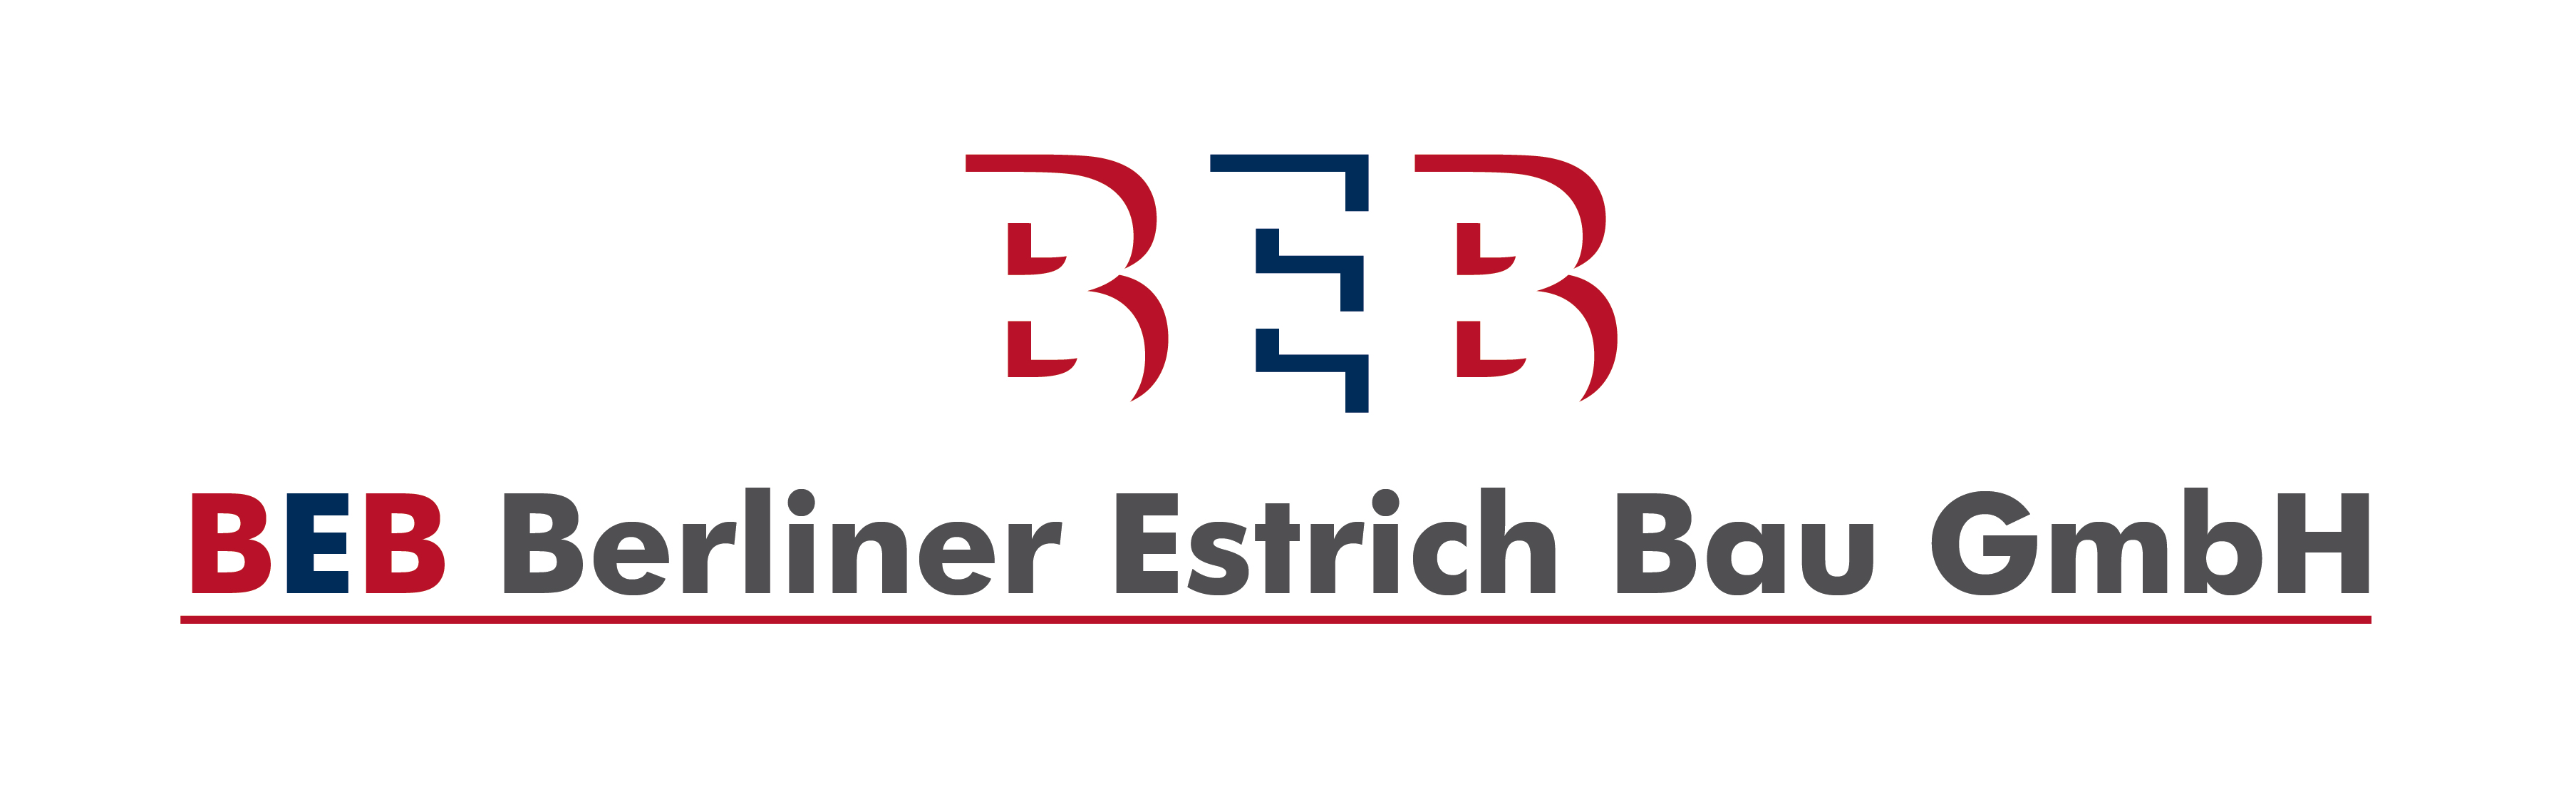 BEB Berliner Estrich Bau GmbH